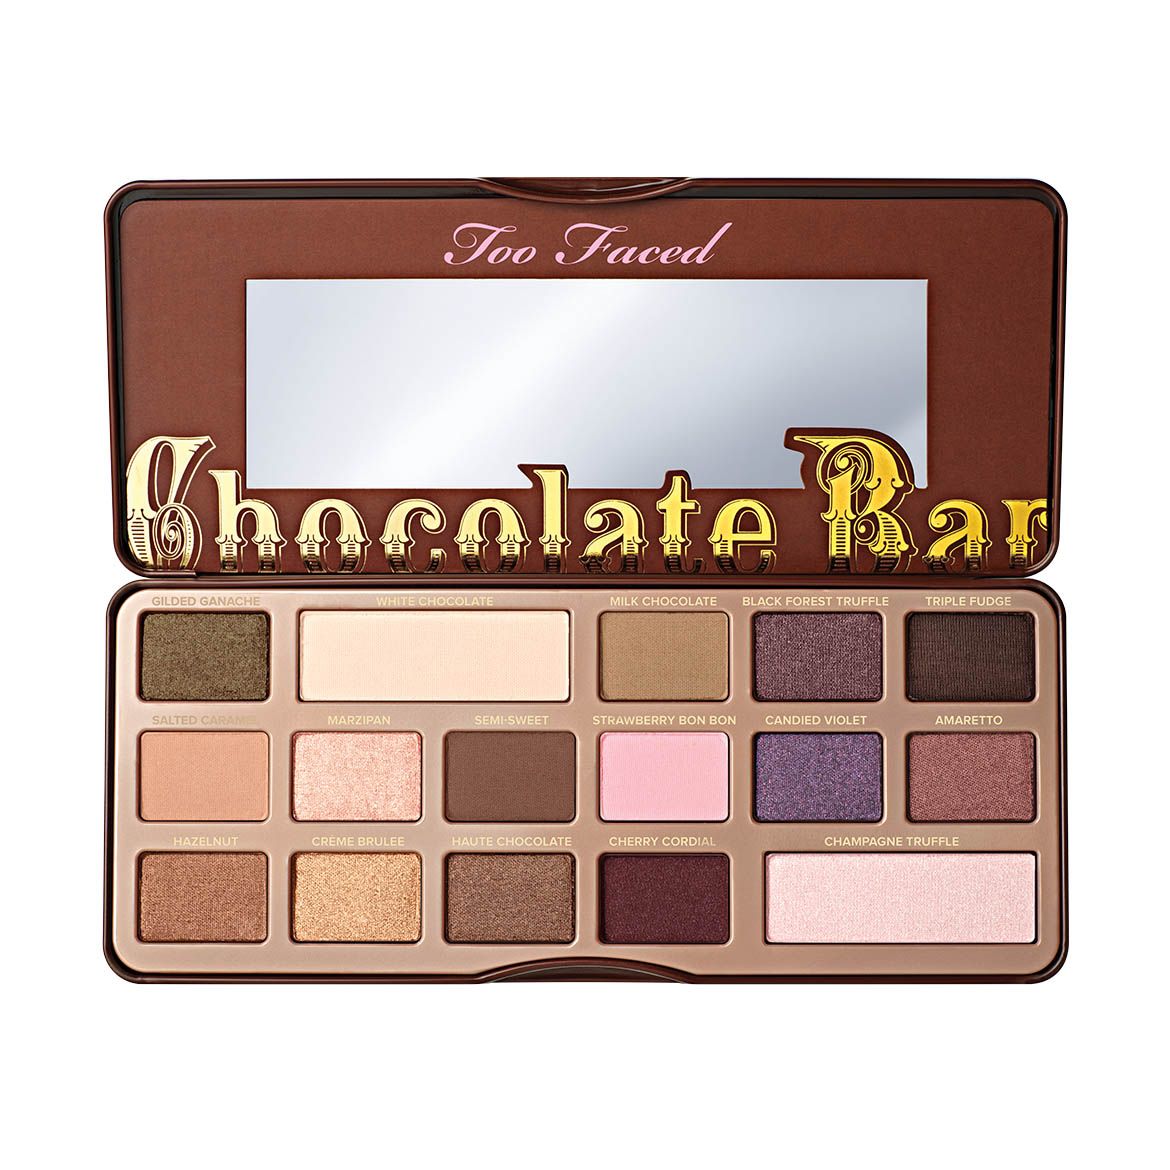 Chocolate Bar, Too Faced